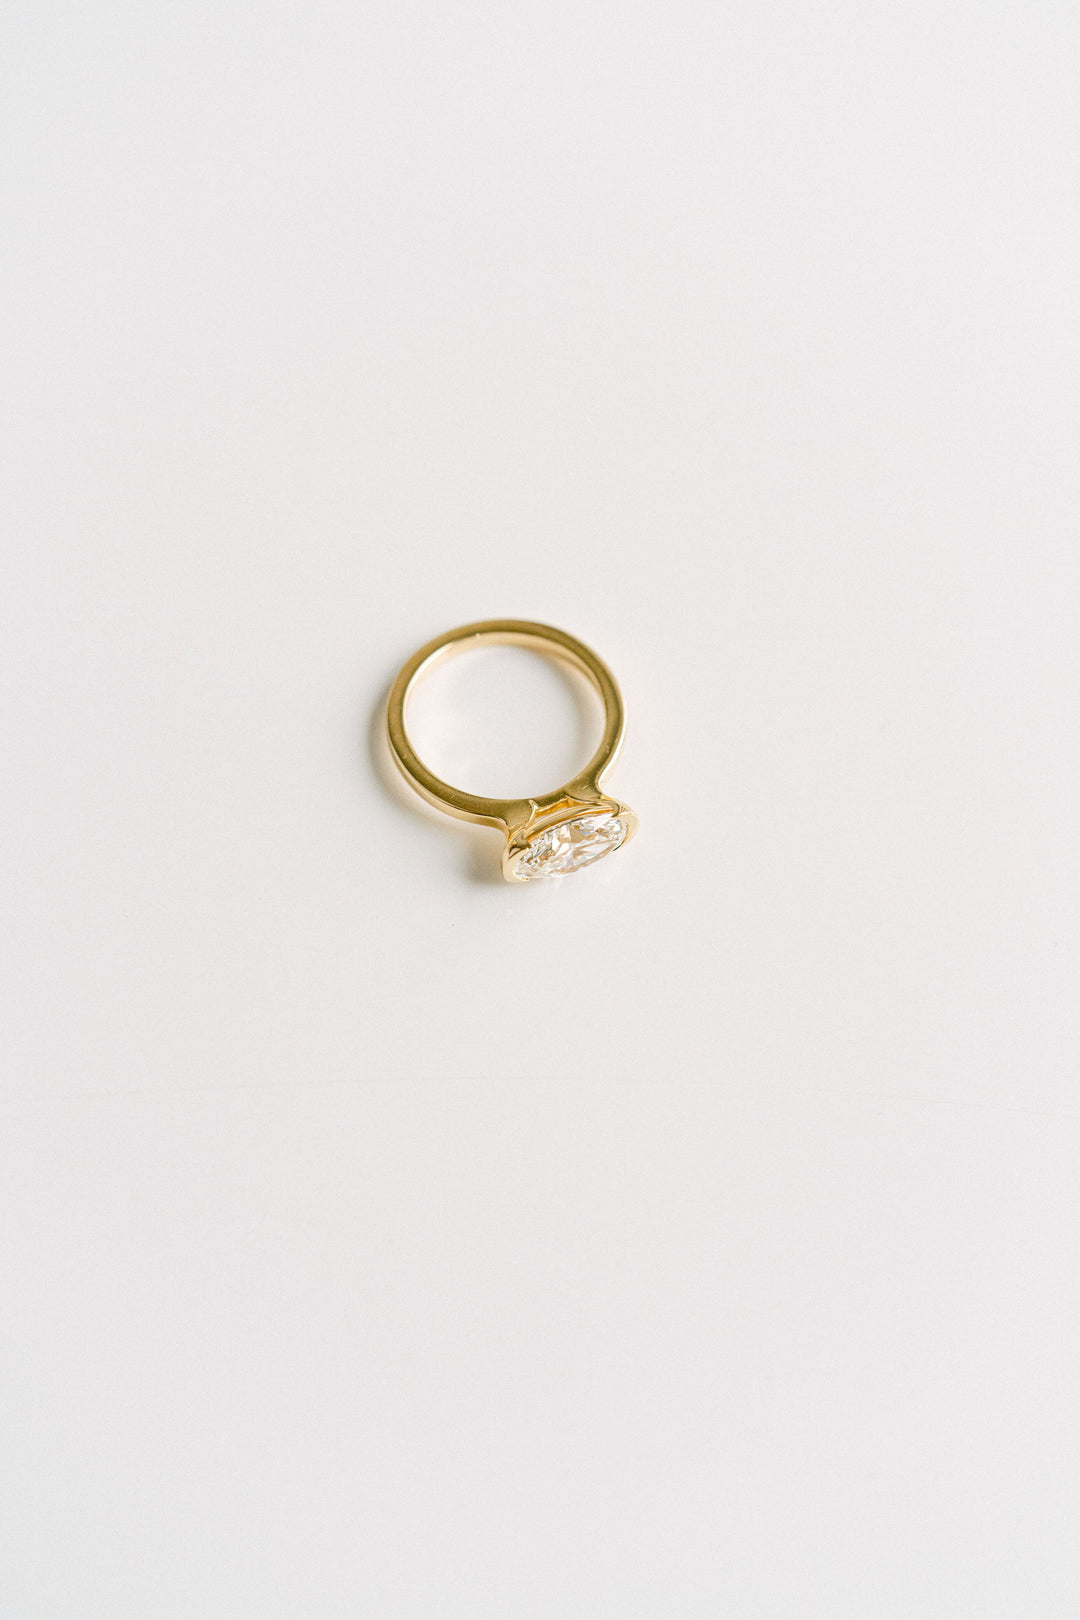 Oval East-West Half Bezel Diamond Engagement Ring, 14k Yellow Gold